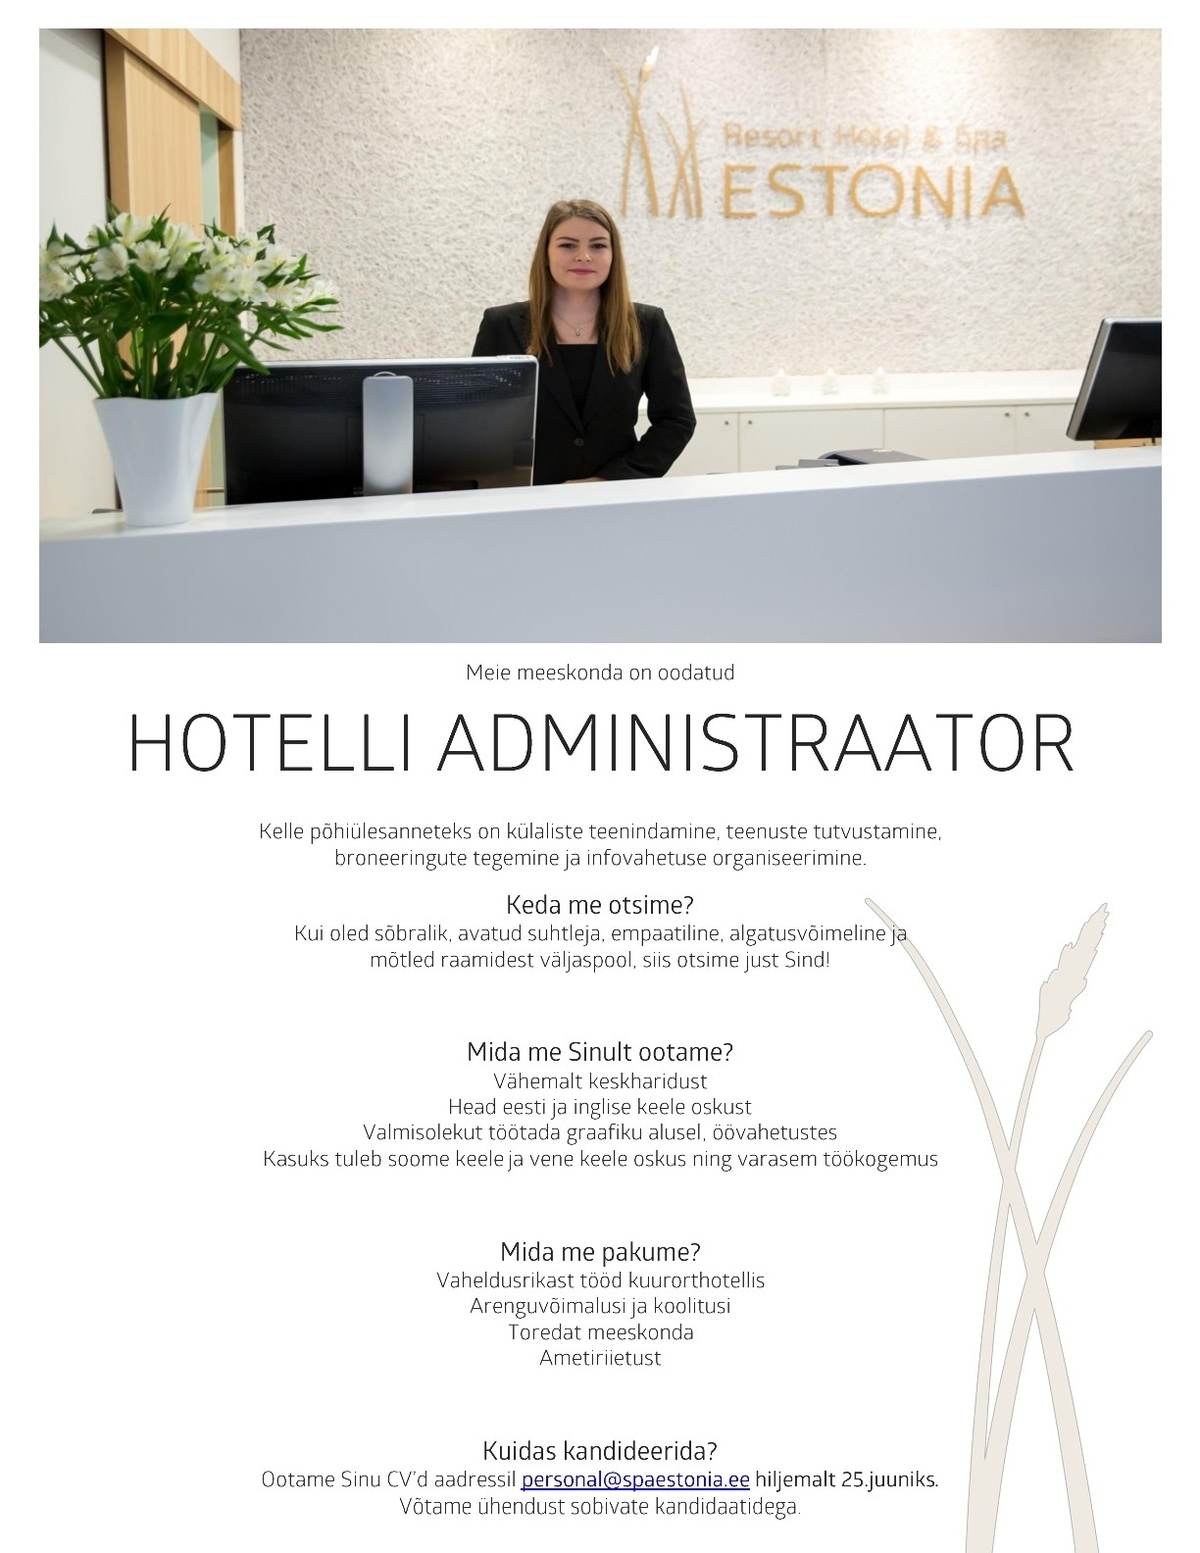 Estonia Spa Hotels AS Hotelli administraator ESTONIA Resort Hotel & Spa´s